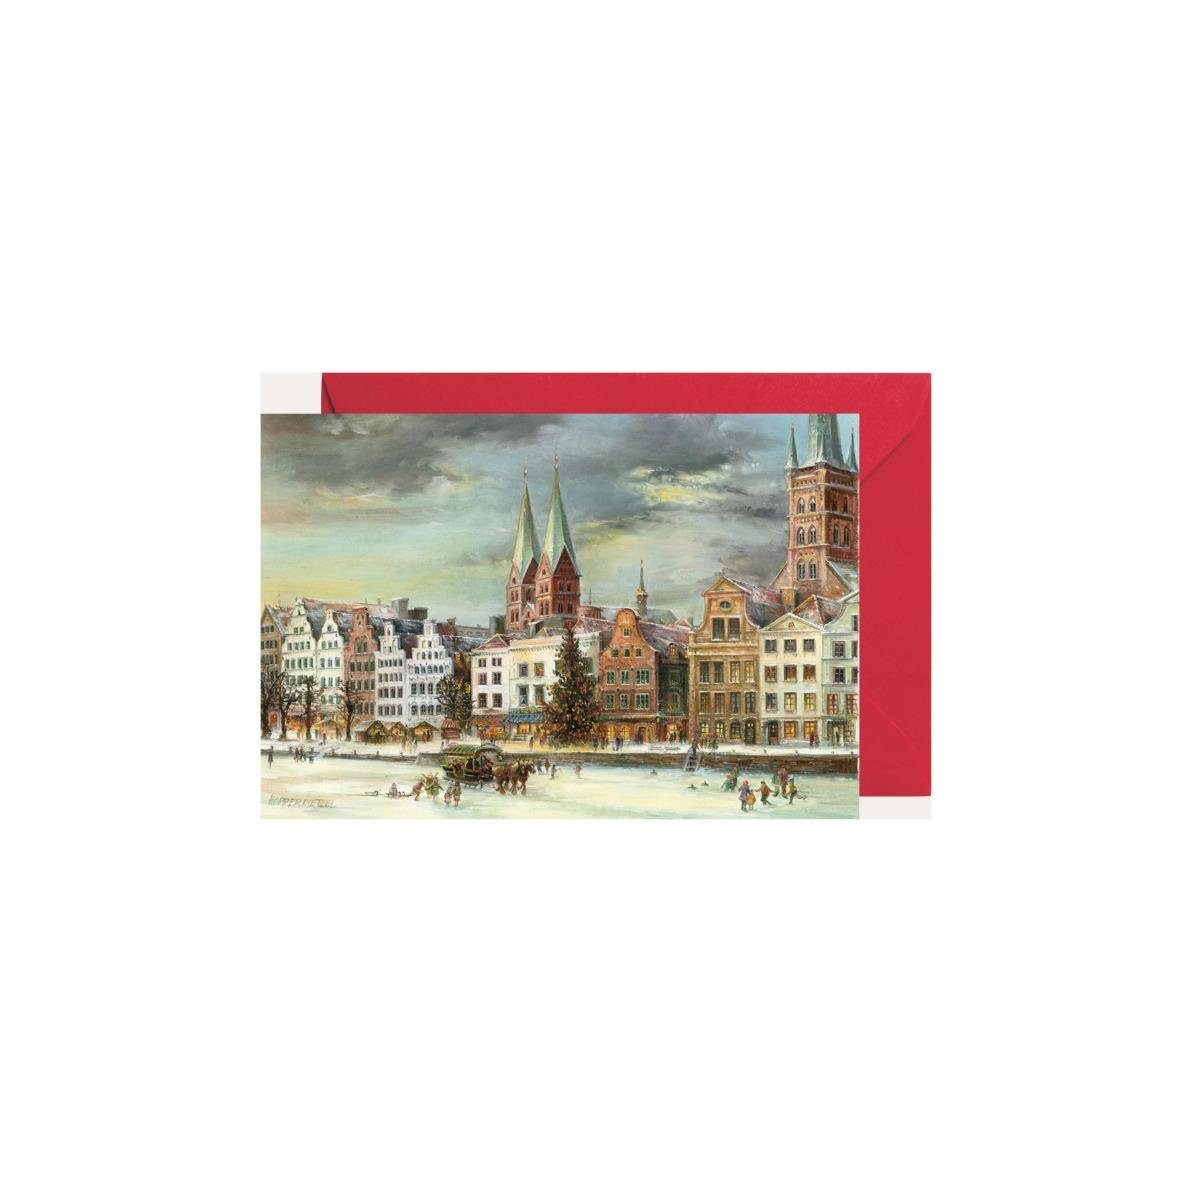 Olewinski Miniadventskalender & 2698 Tochter - "Lübeck" Adventskalender